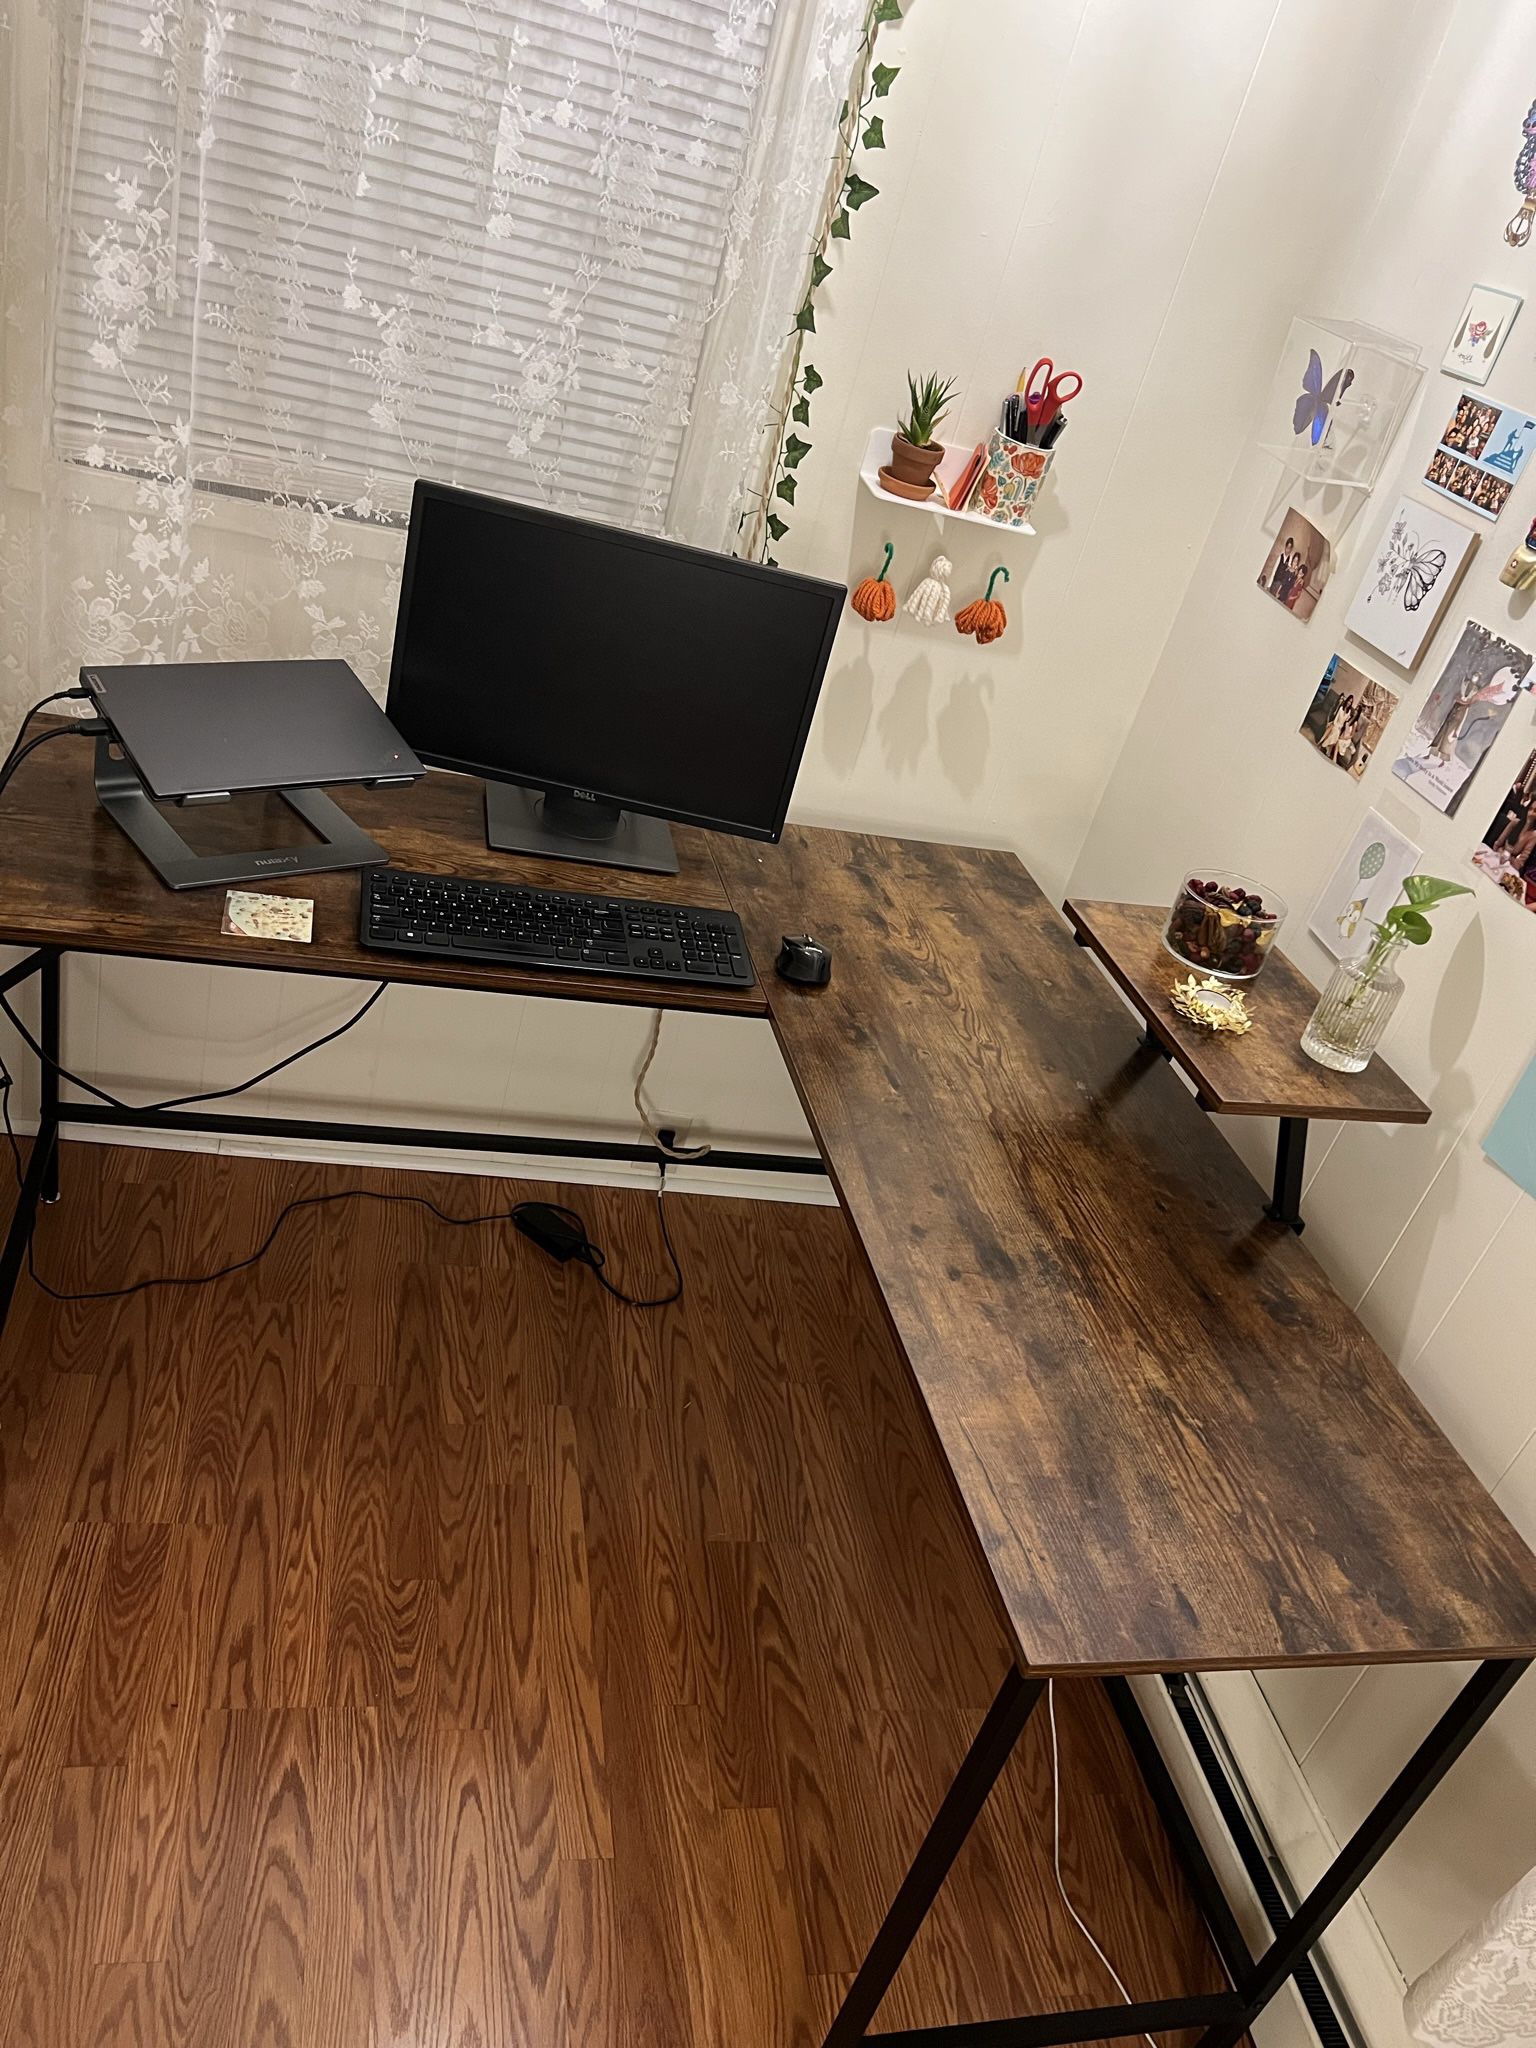 L Shaped desk